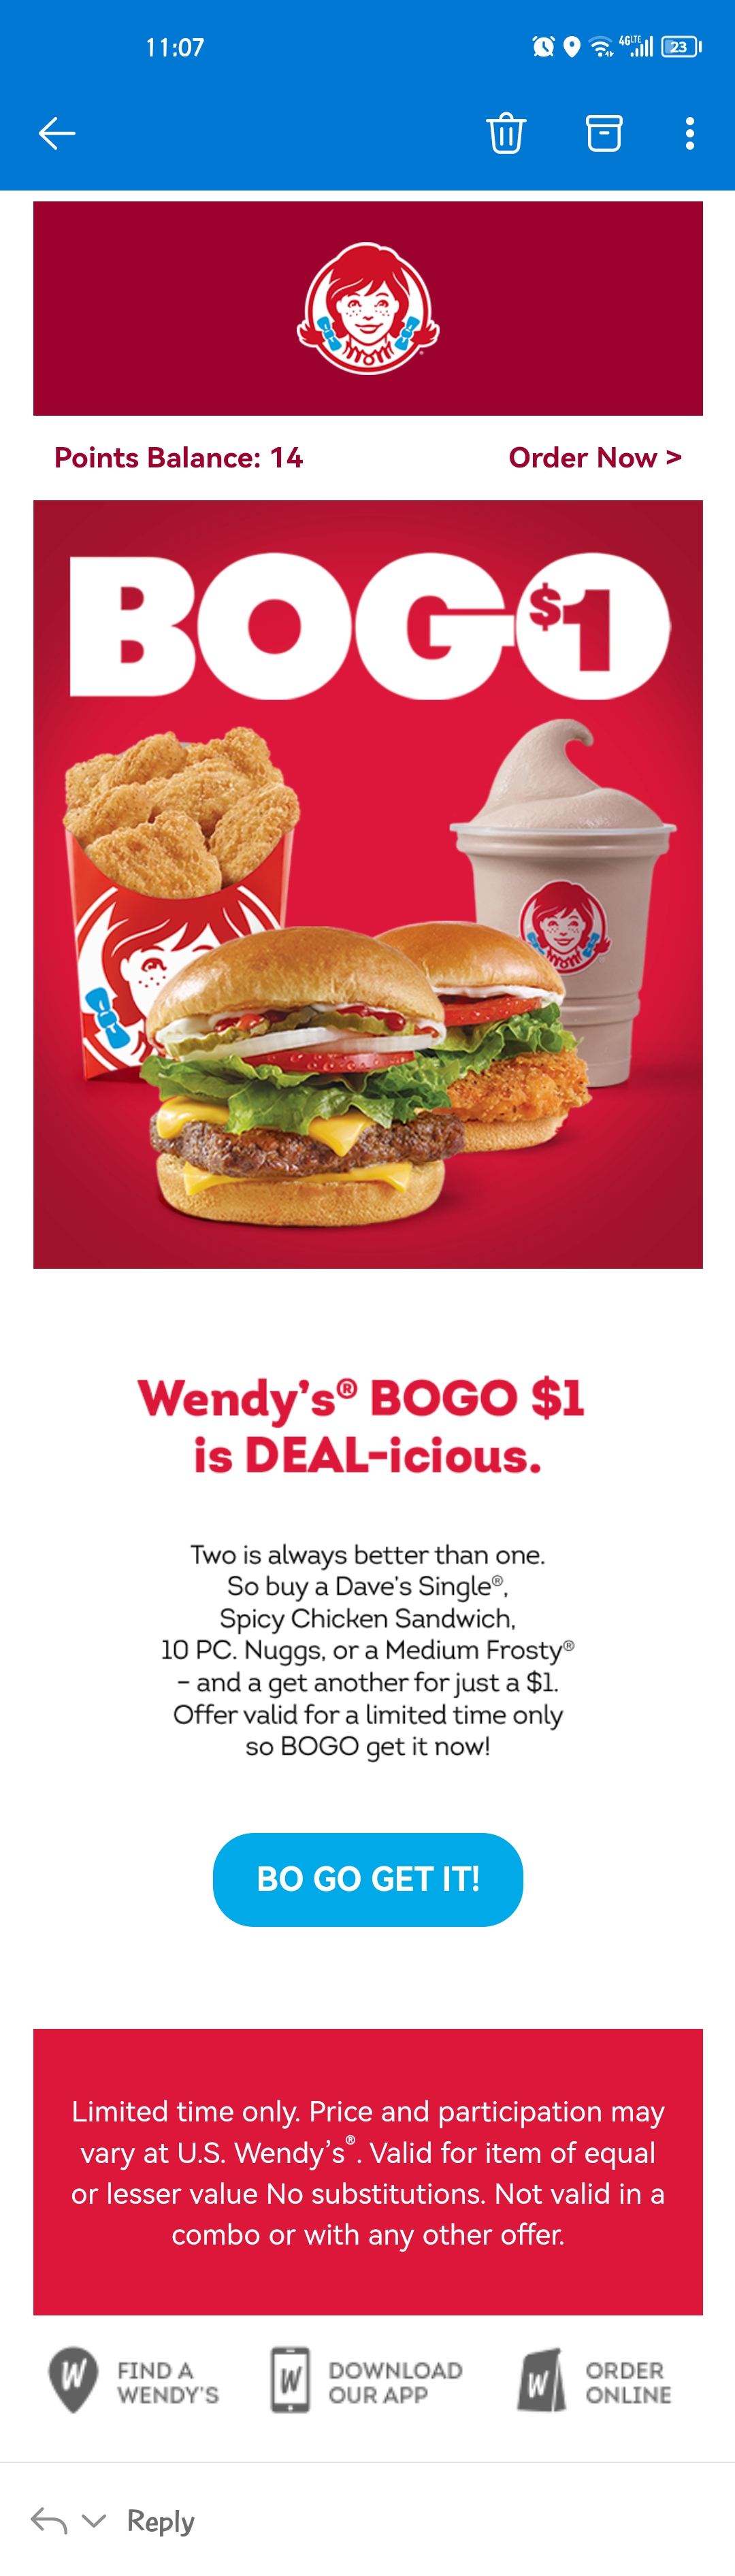 Wendy's BOGO$1 促销